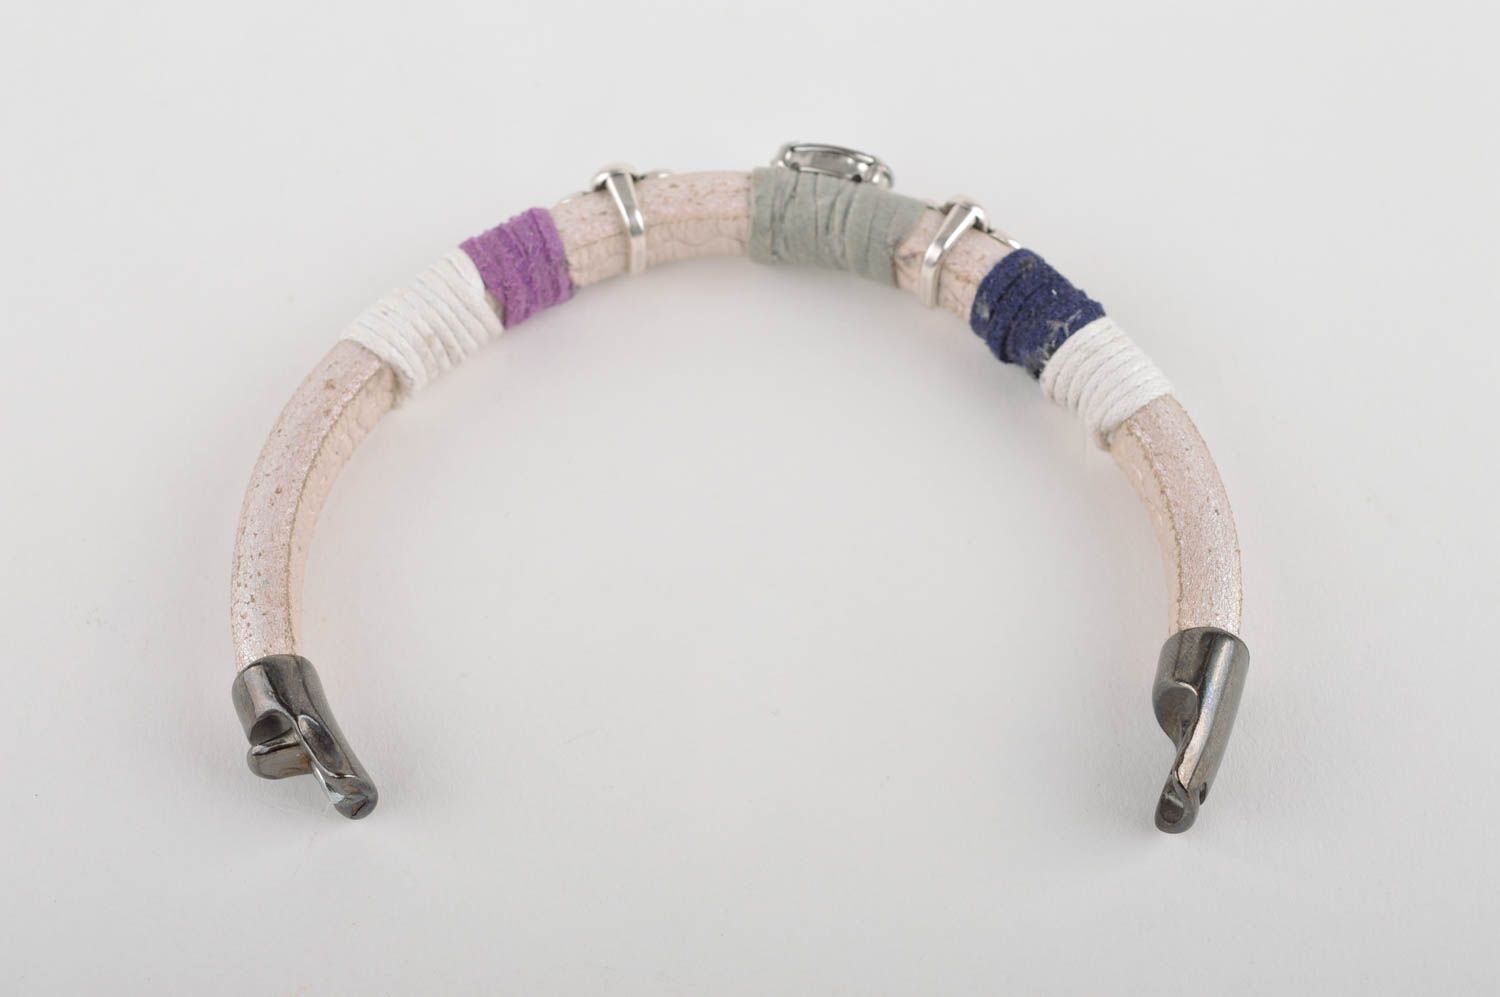 Stylish handmade leather bracelet designs leather goods fashion trends photo 5